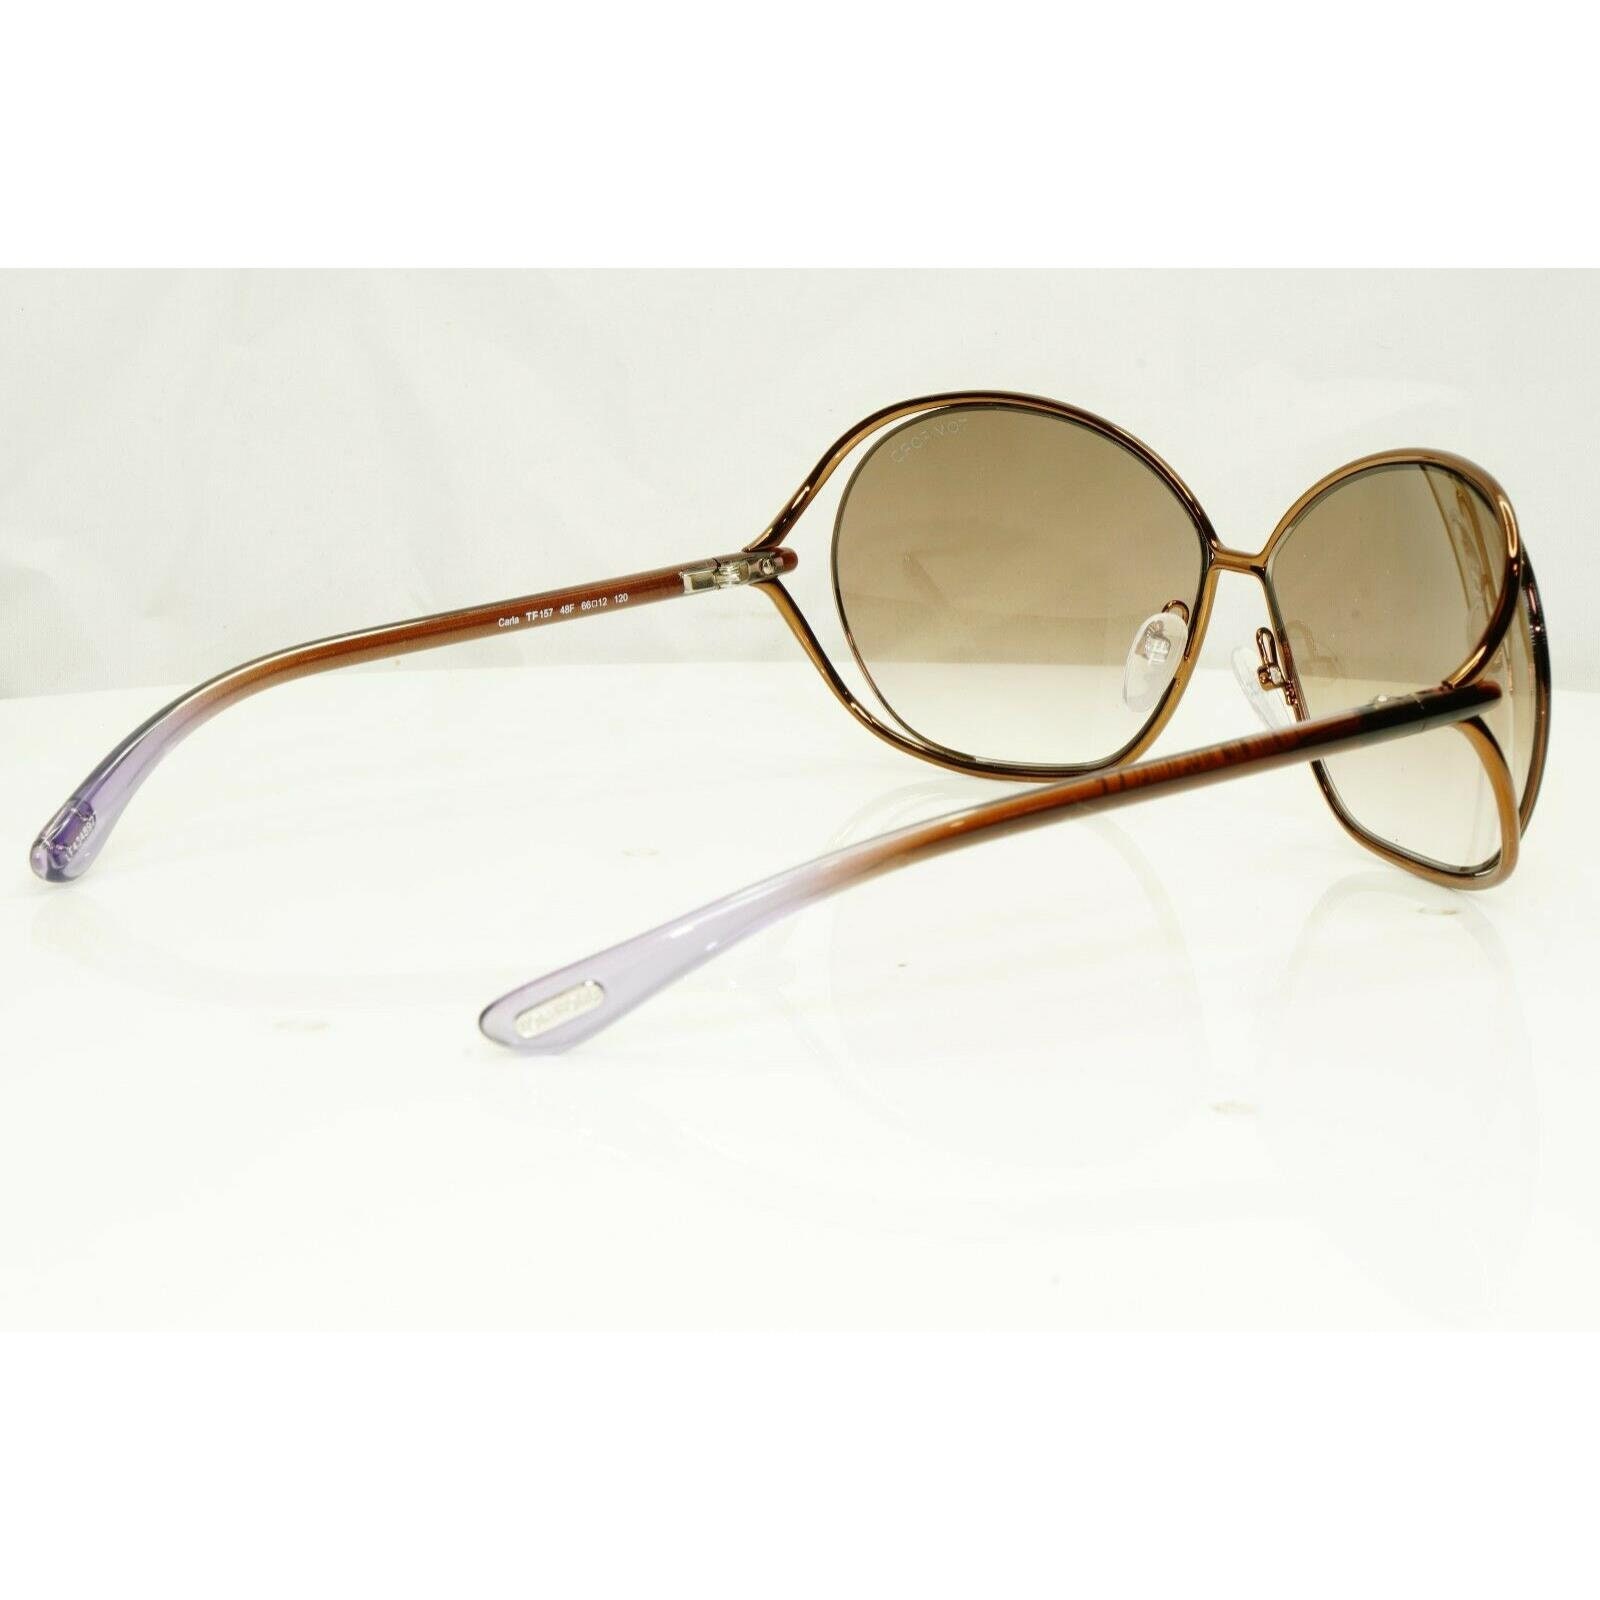 AUTHENTIC TOM FORD Womens Sunglasses Shiny Bronze Brown Carla TF157 48F  34462 £155.00 - PicClick UK